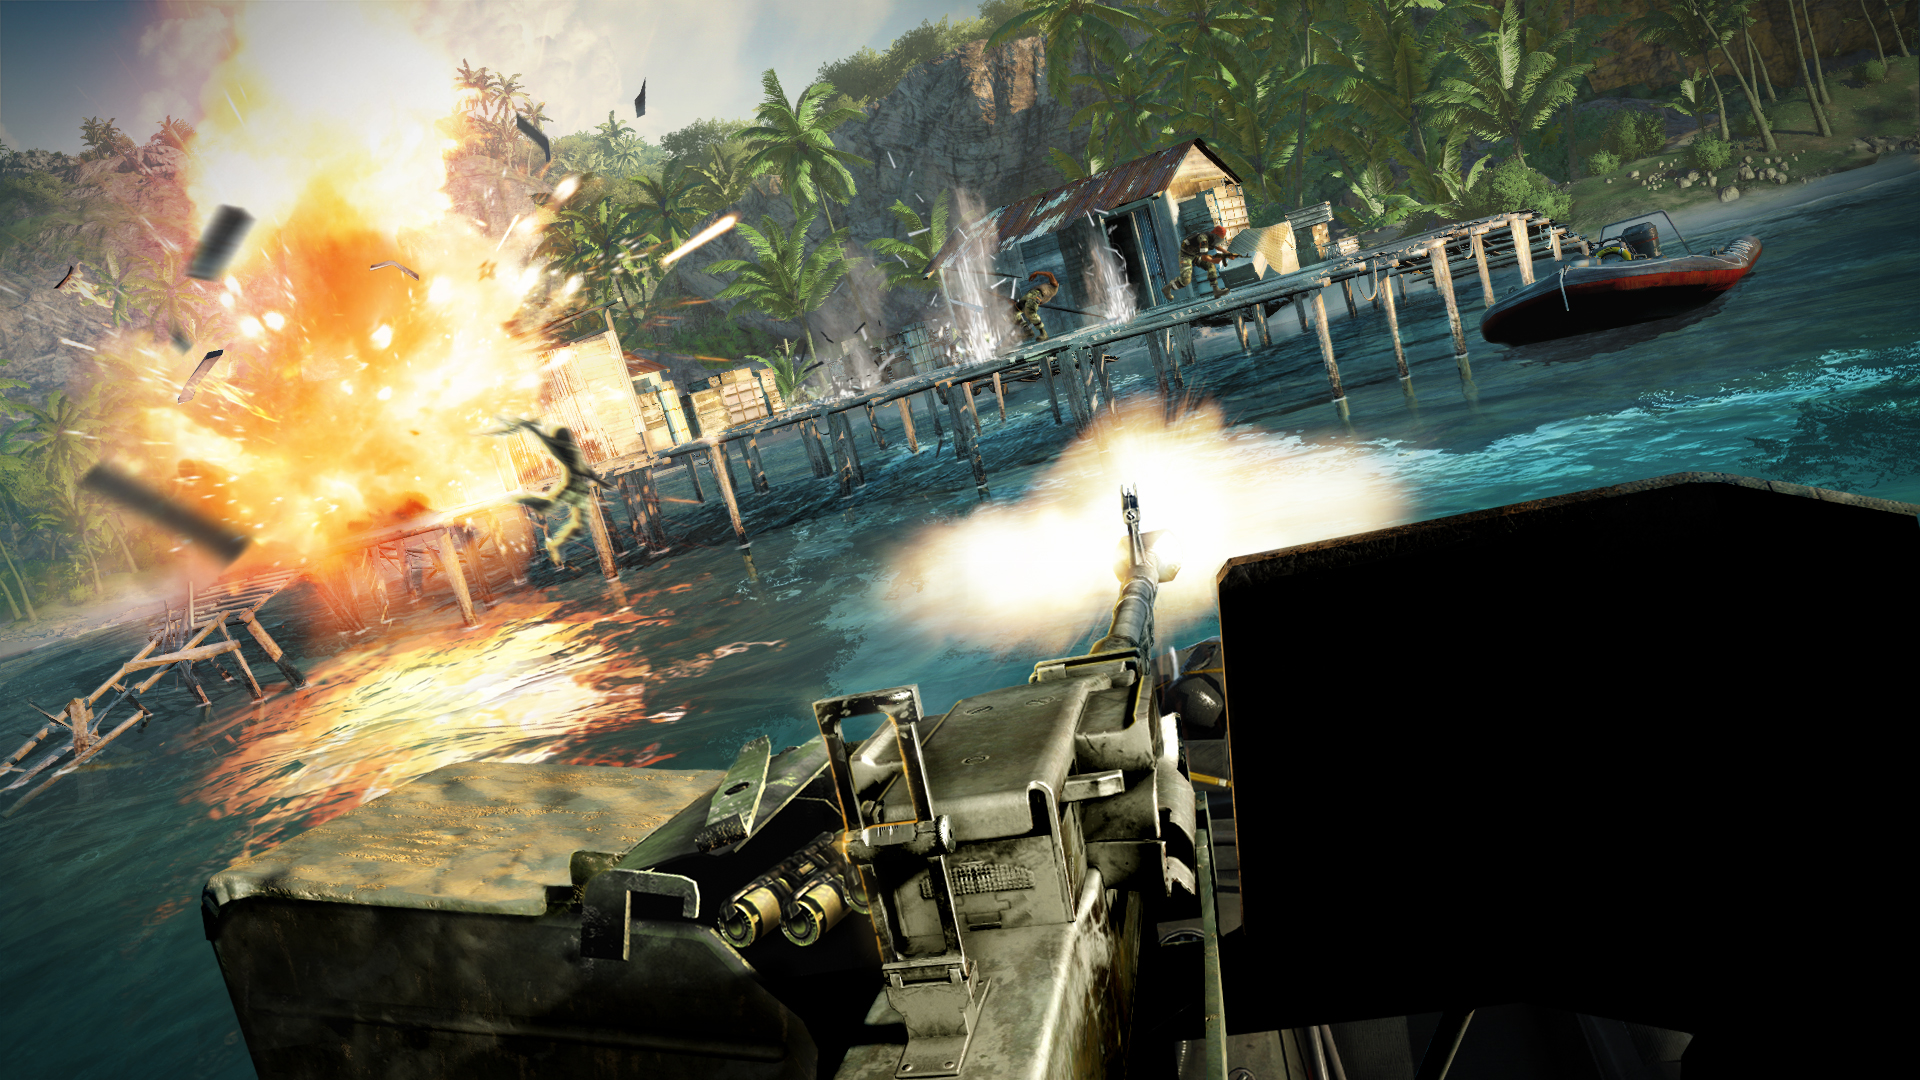 Ubisoft Far Cry 3 - Xbox 360 - image 2 of 11